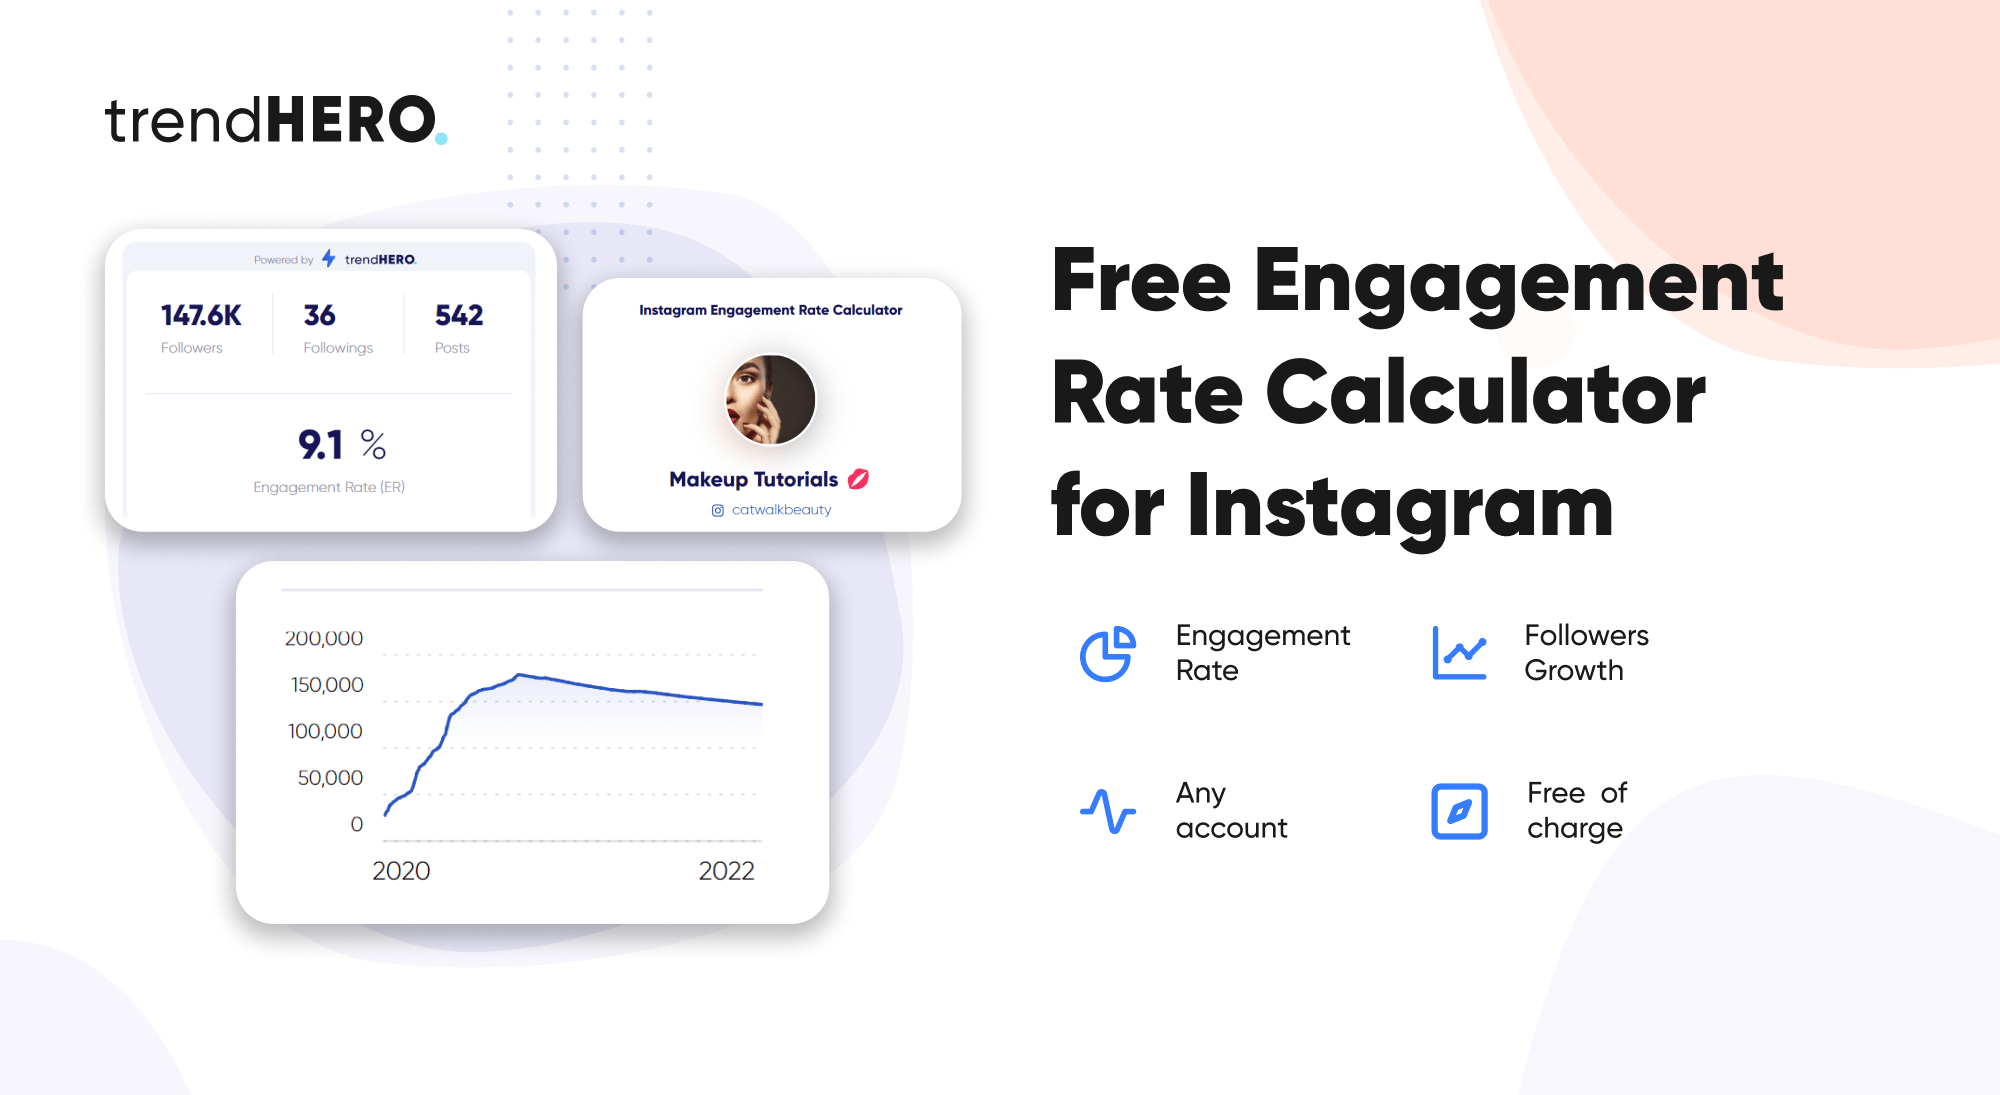 Instagram engagement rate